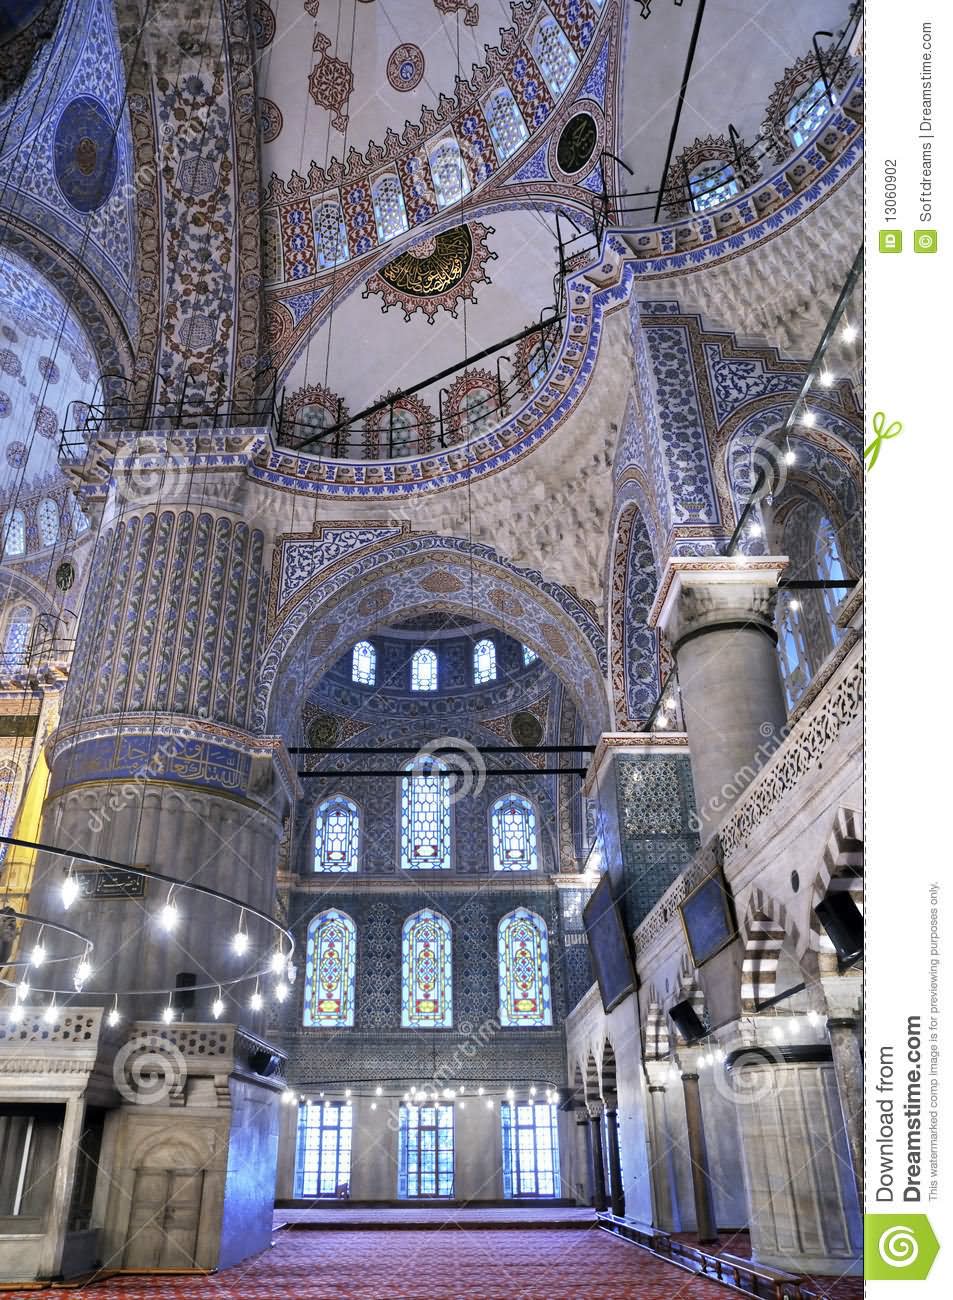 Blue Mosque Interior View Image